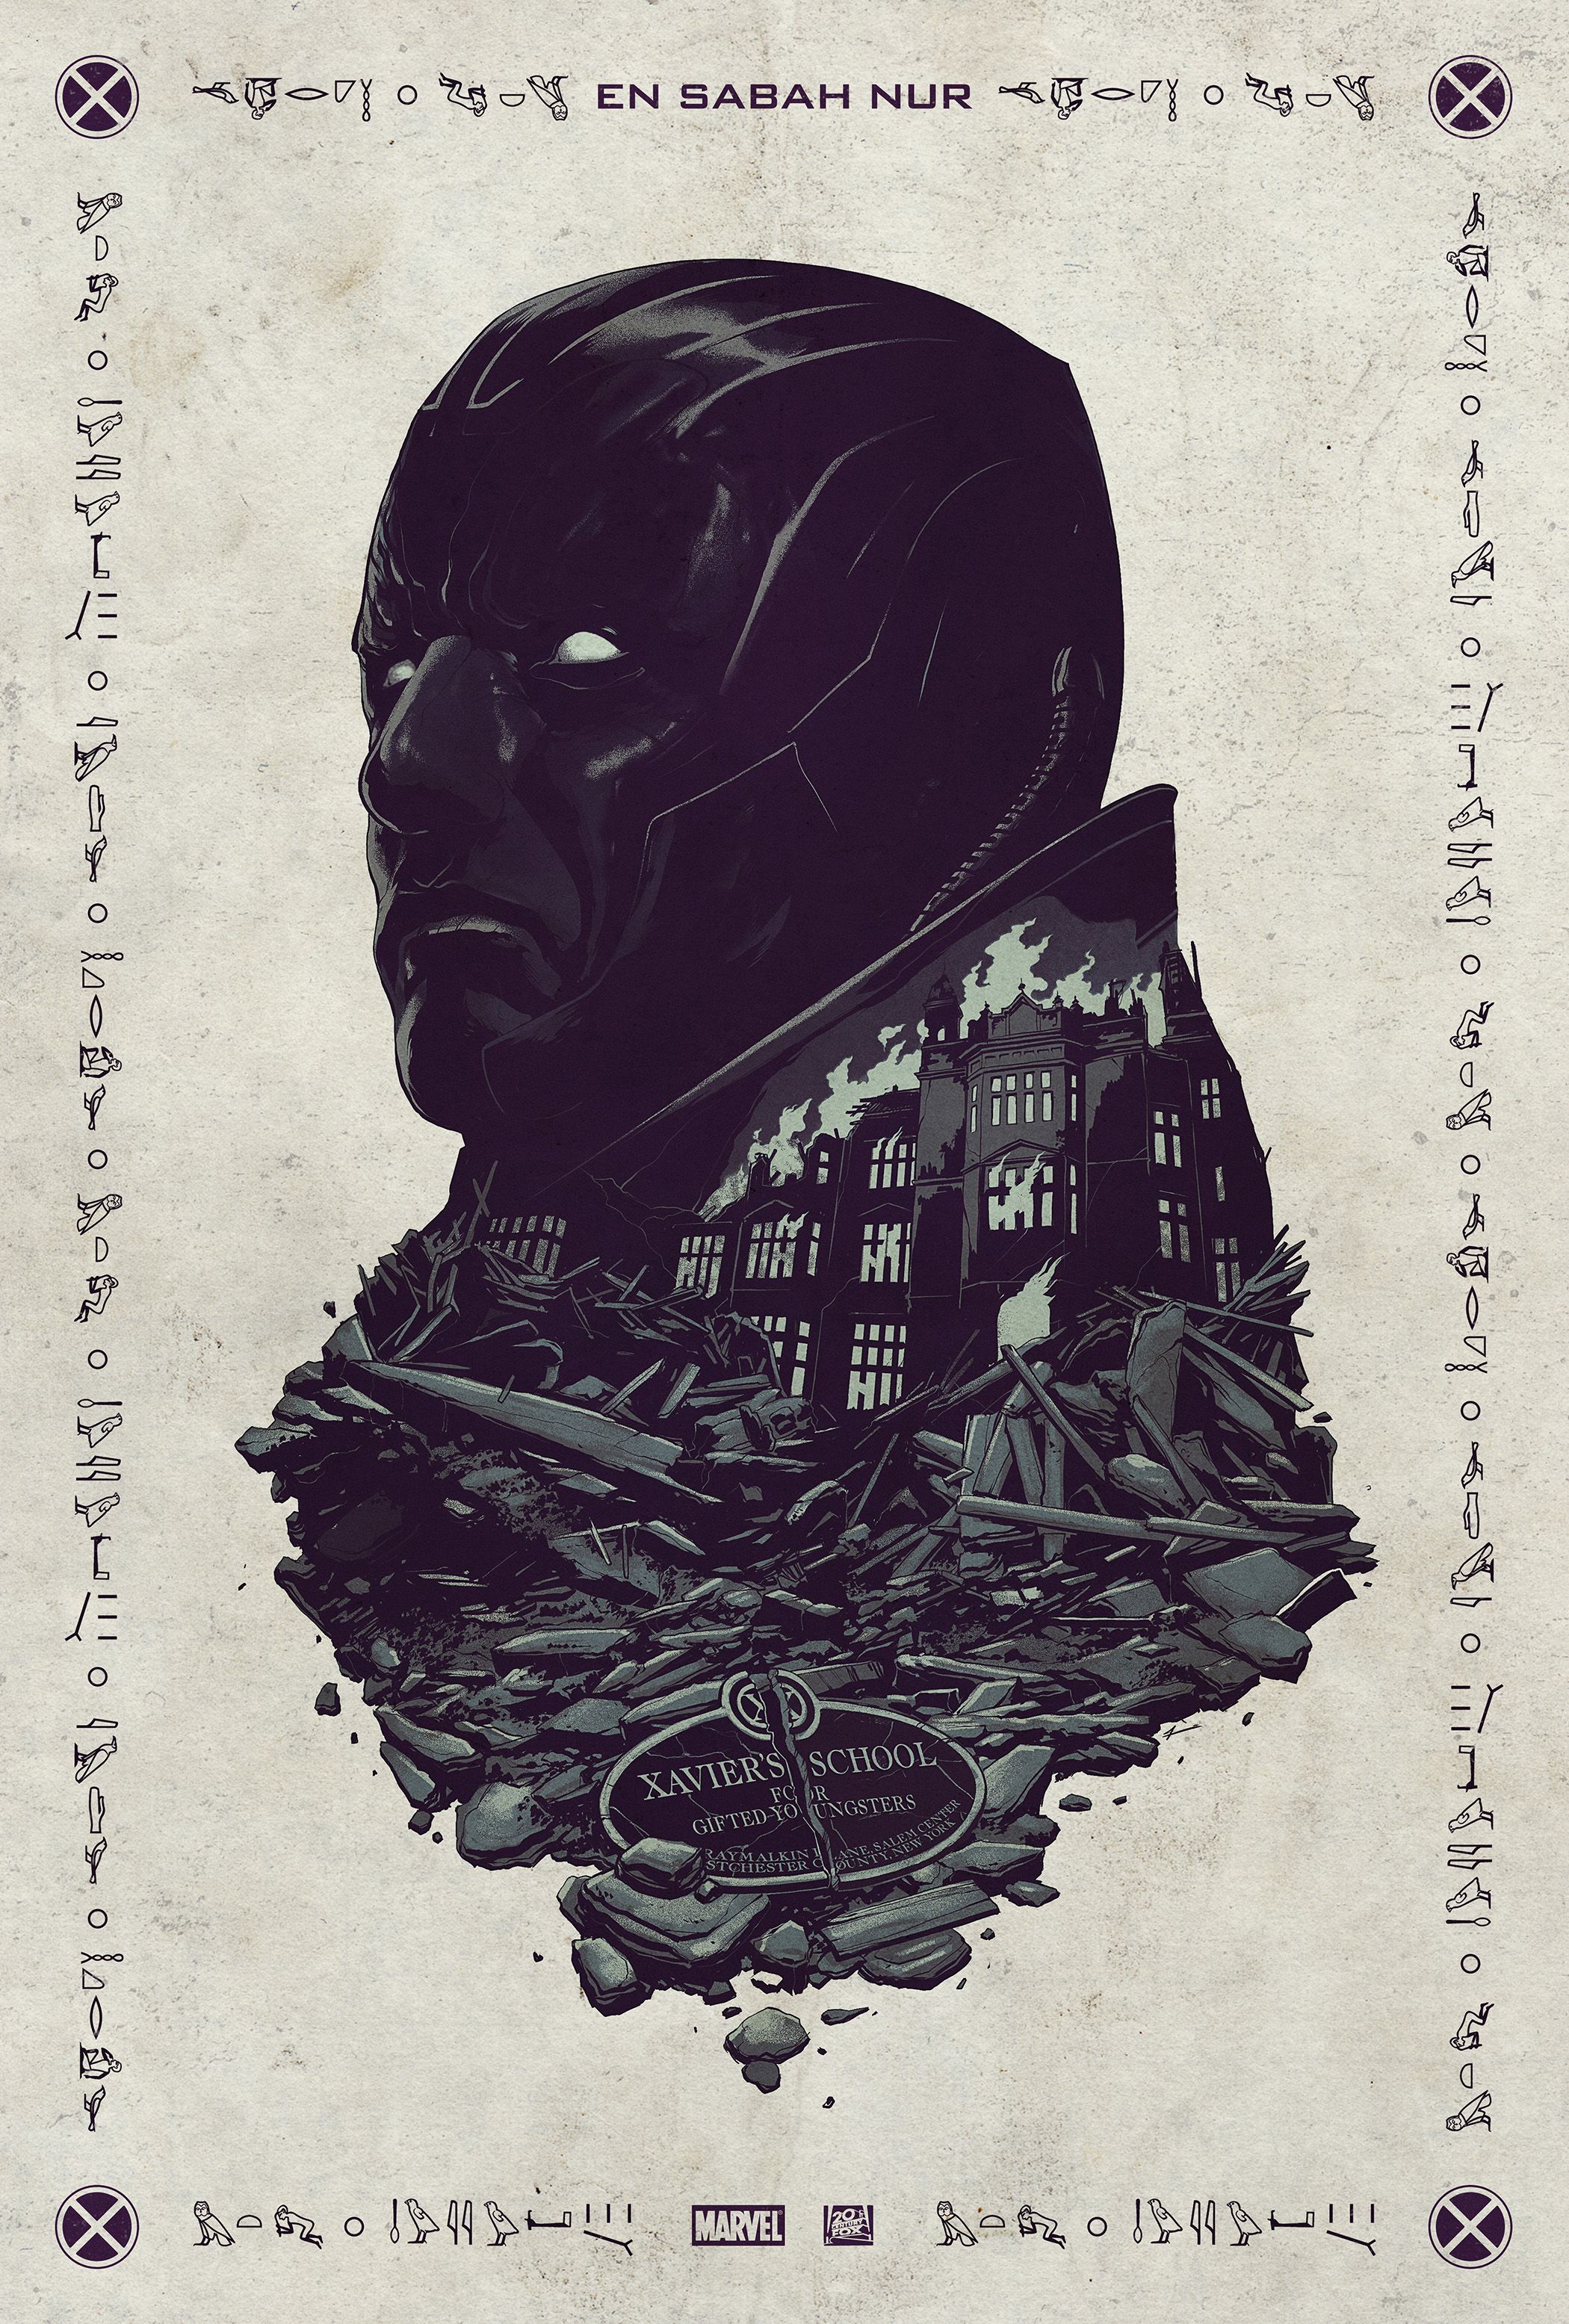 X-Men: Apocalypse Poster Art from Comic-Con 2015